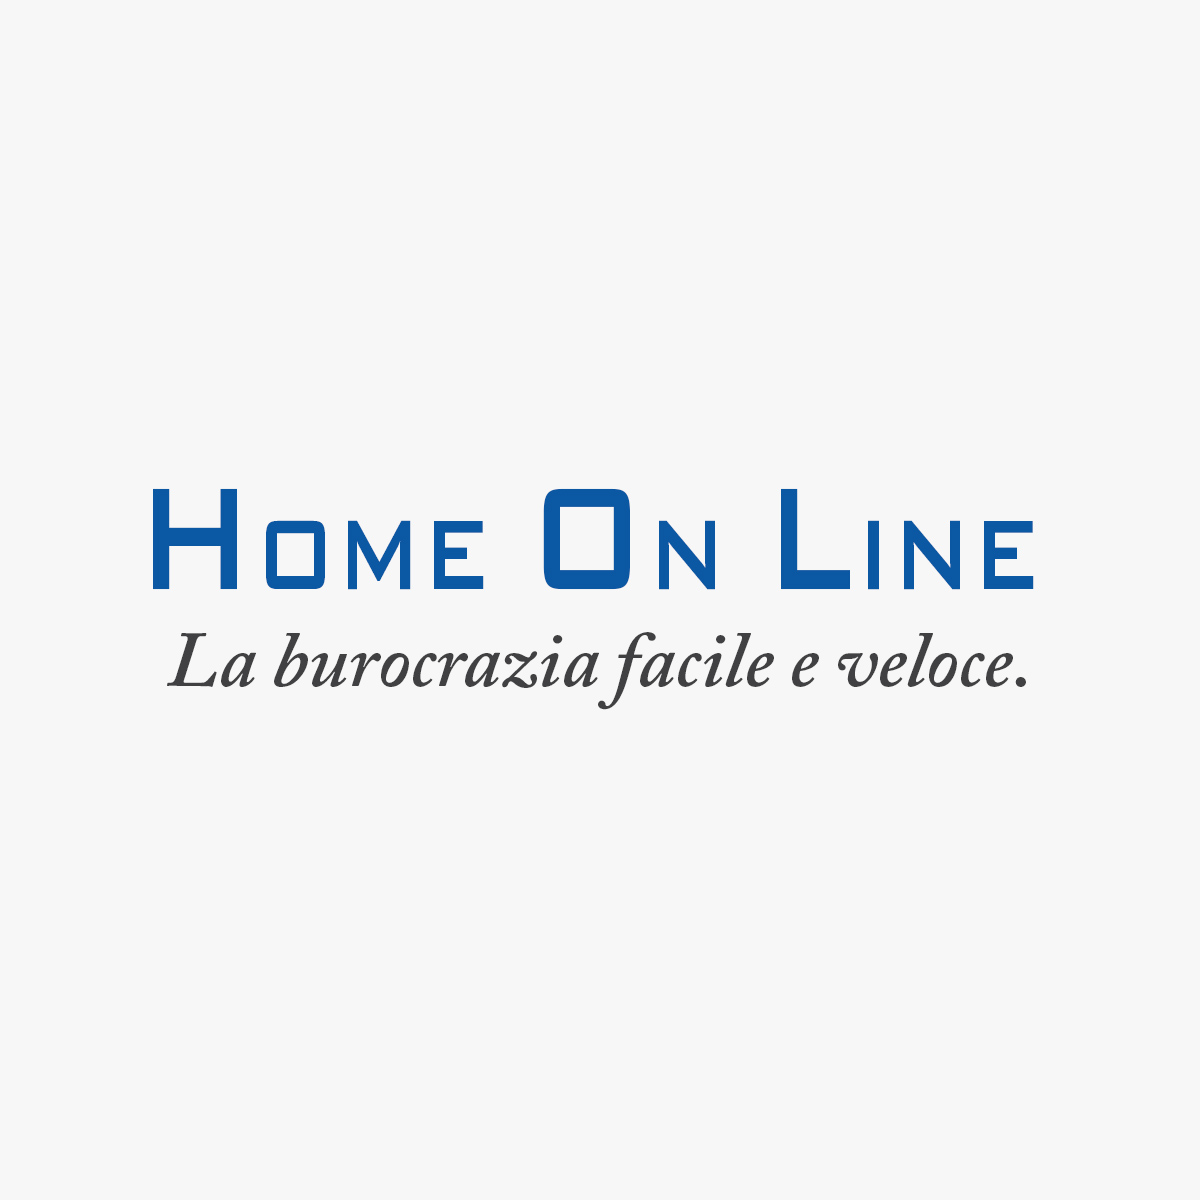 Home on line logo